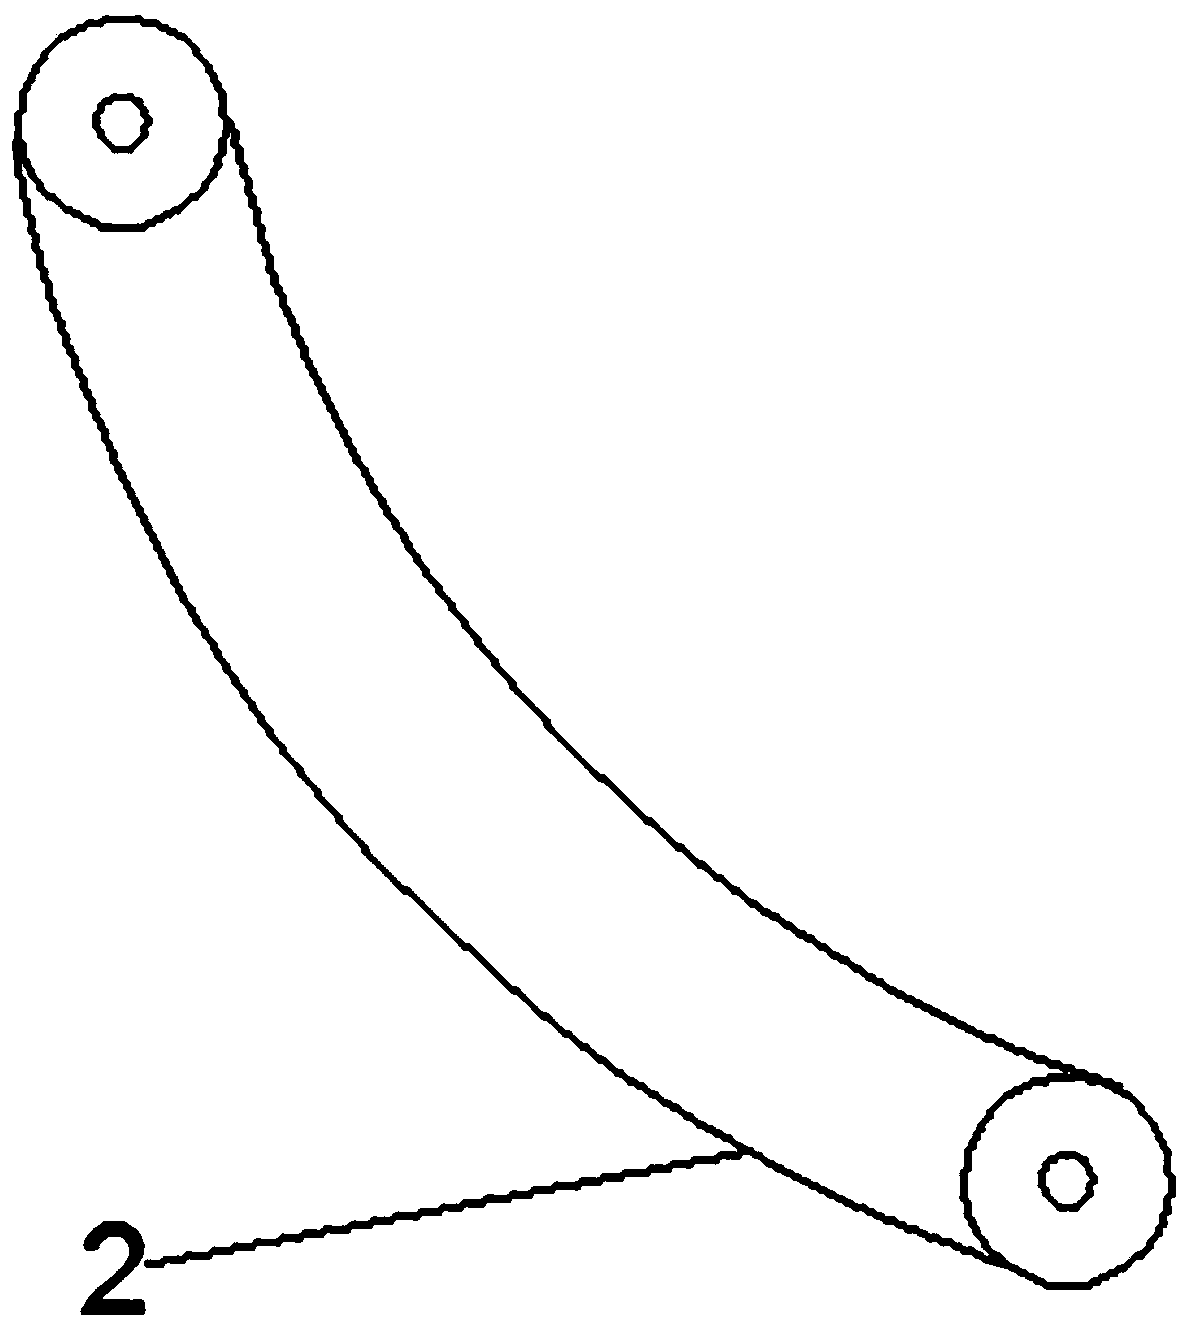 Elastic swinging column with replaceable bending dampers